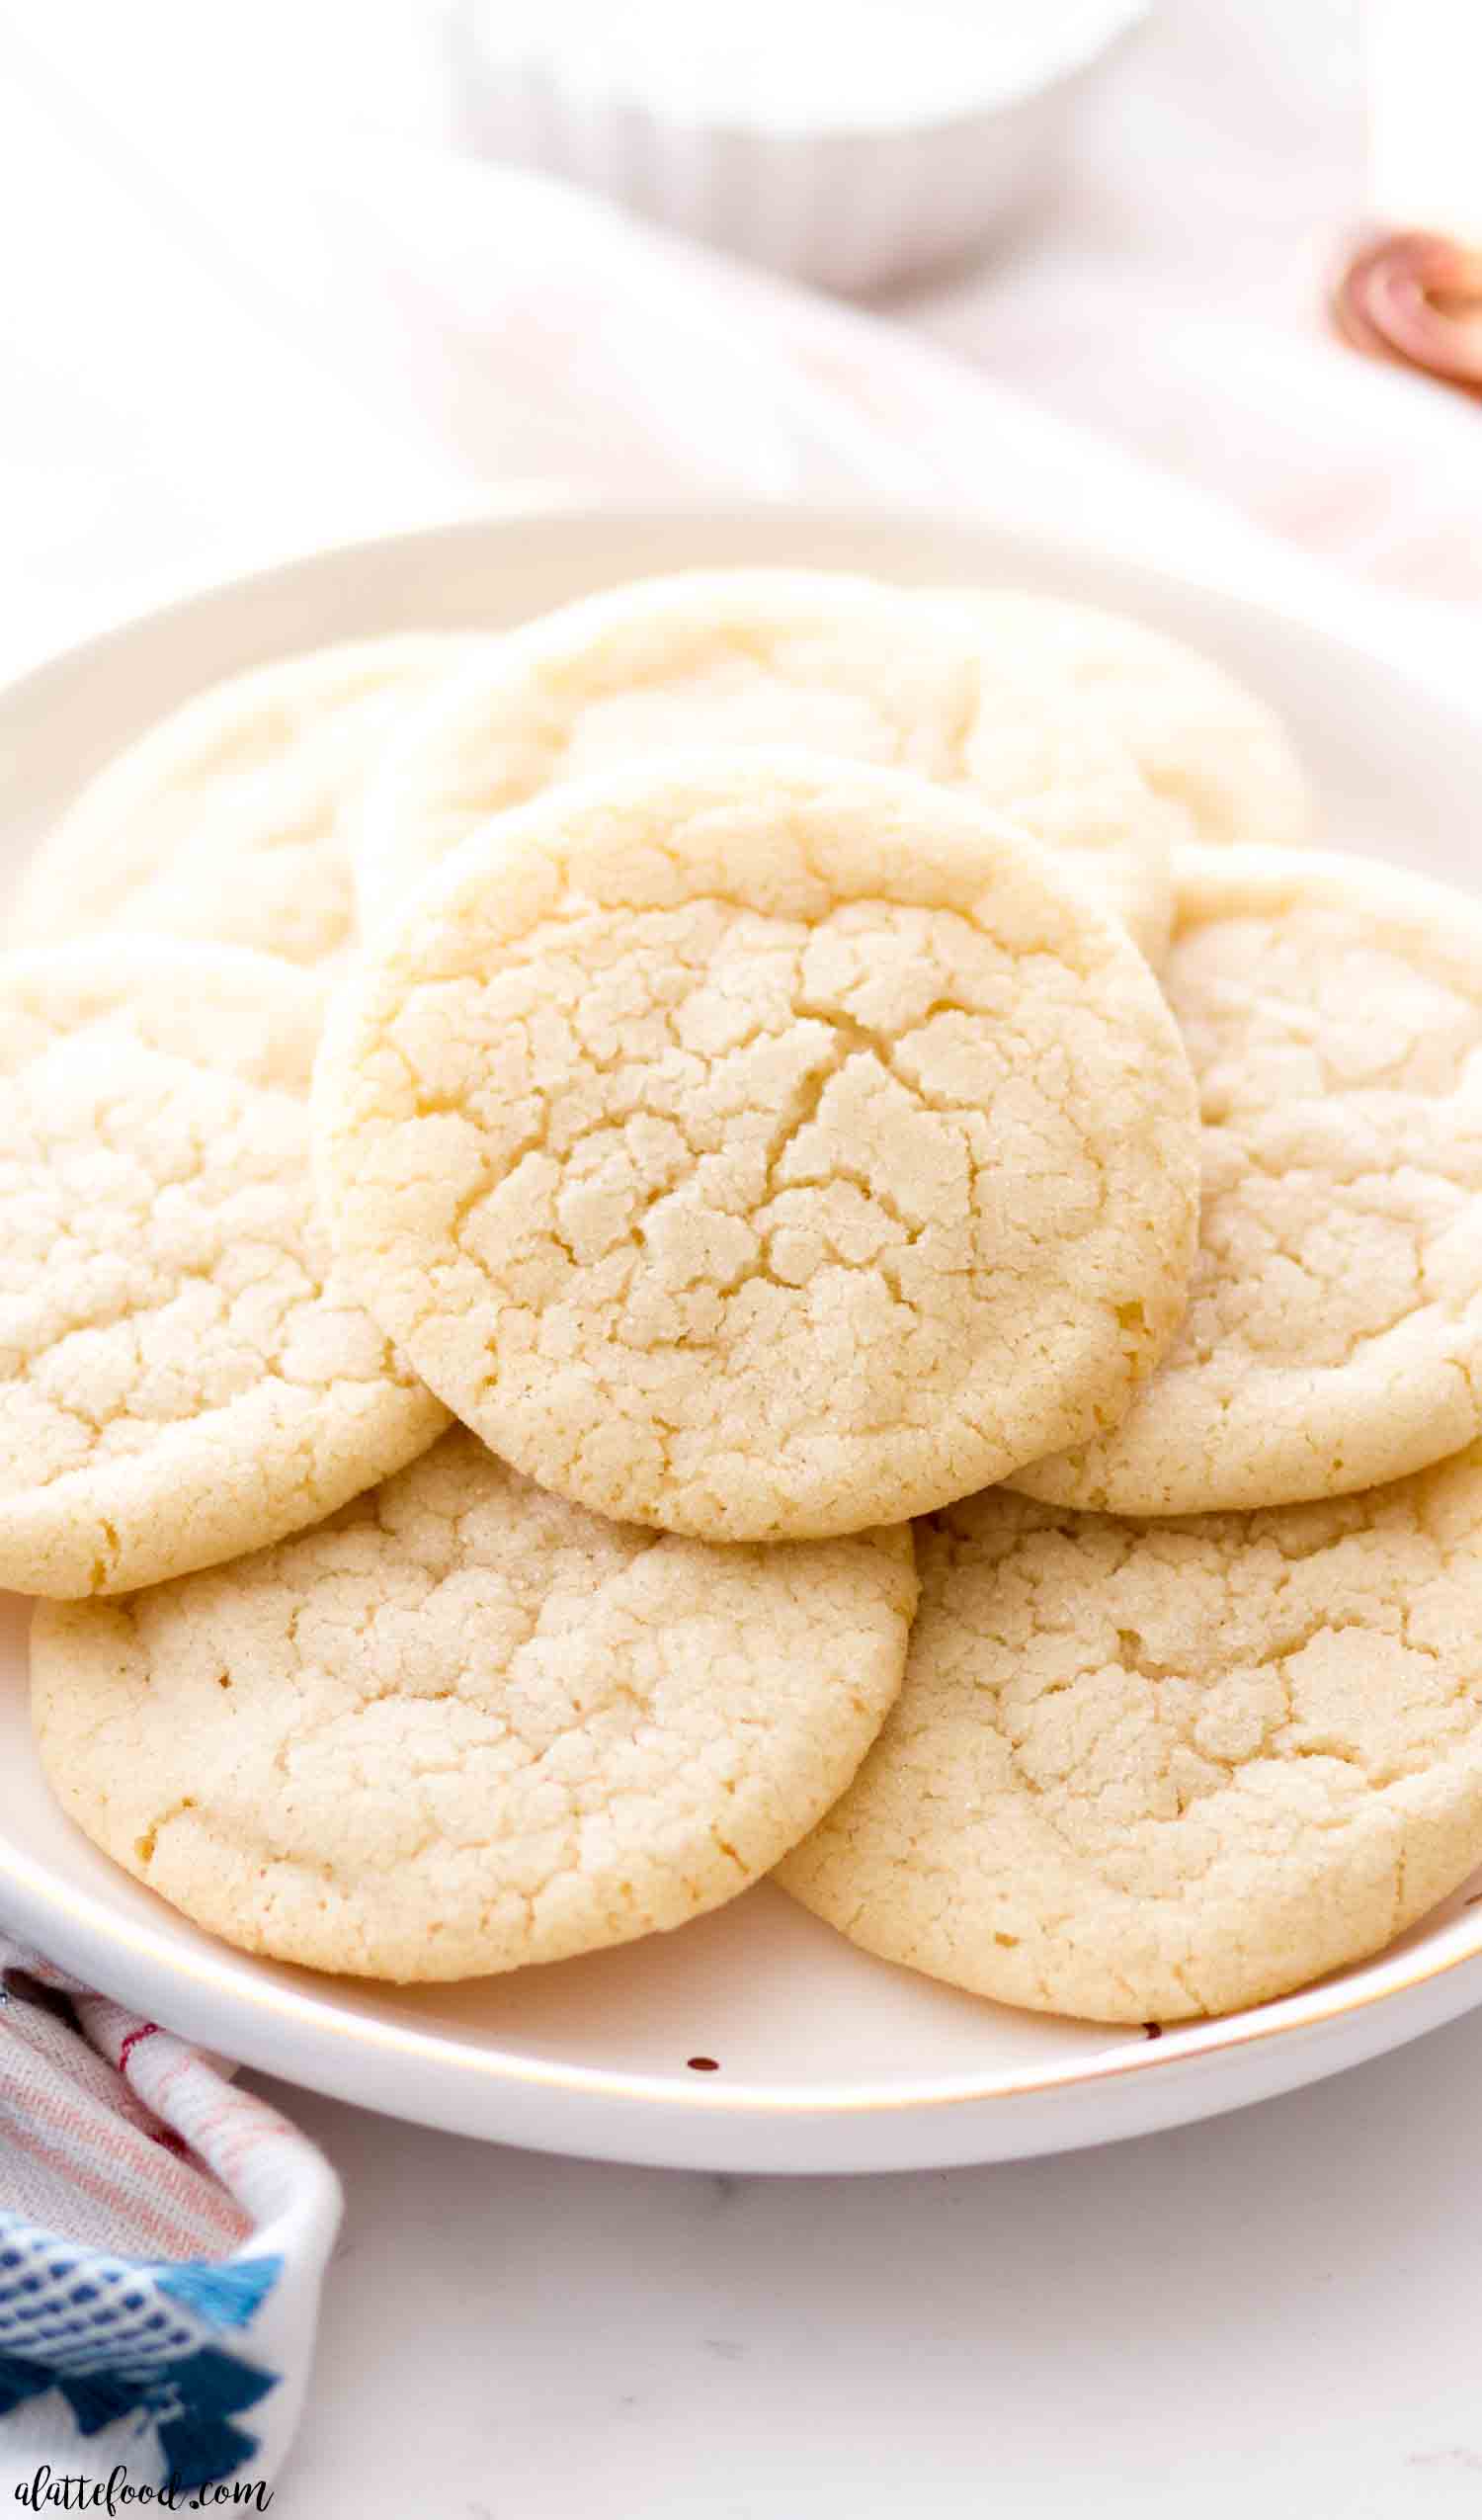 Shortbread Cookies Recipe (No Dough Chilling!) - Sally's Baking Addiction